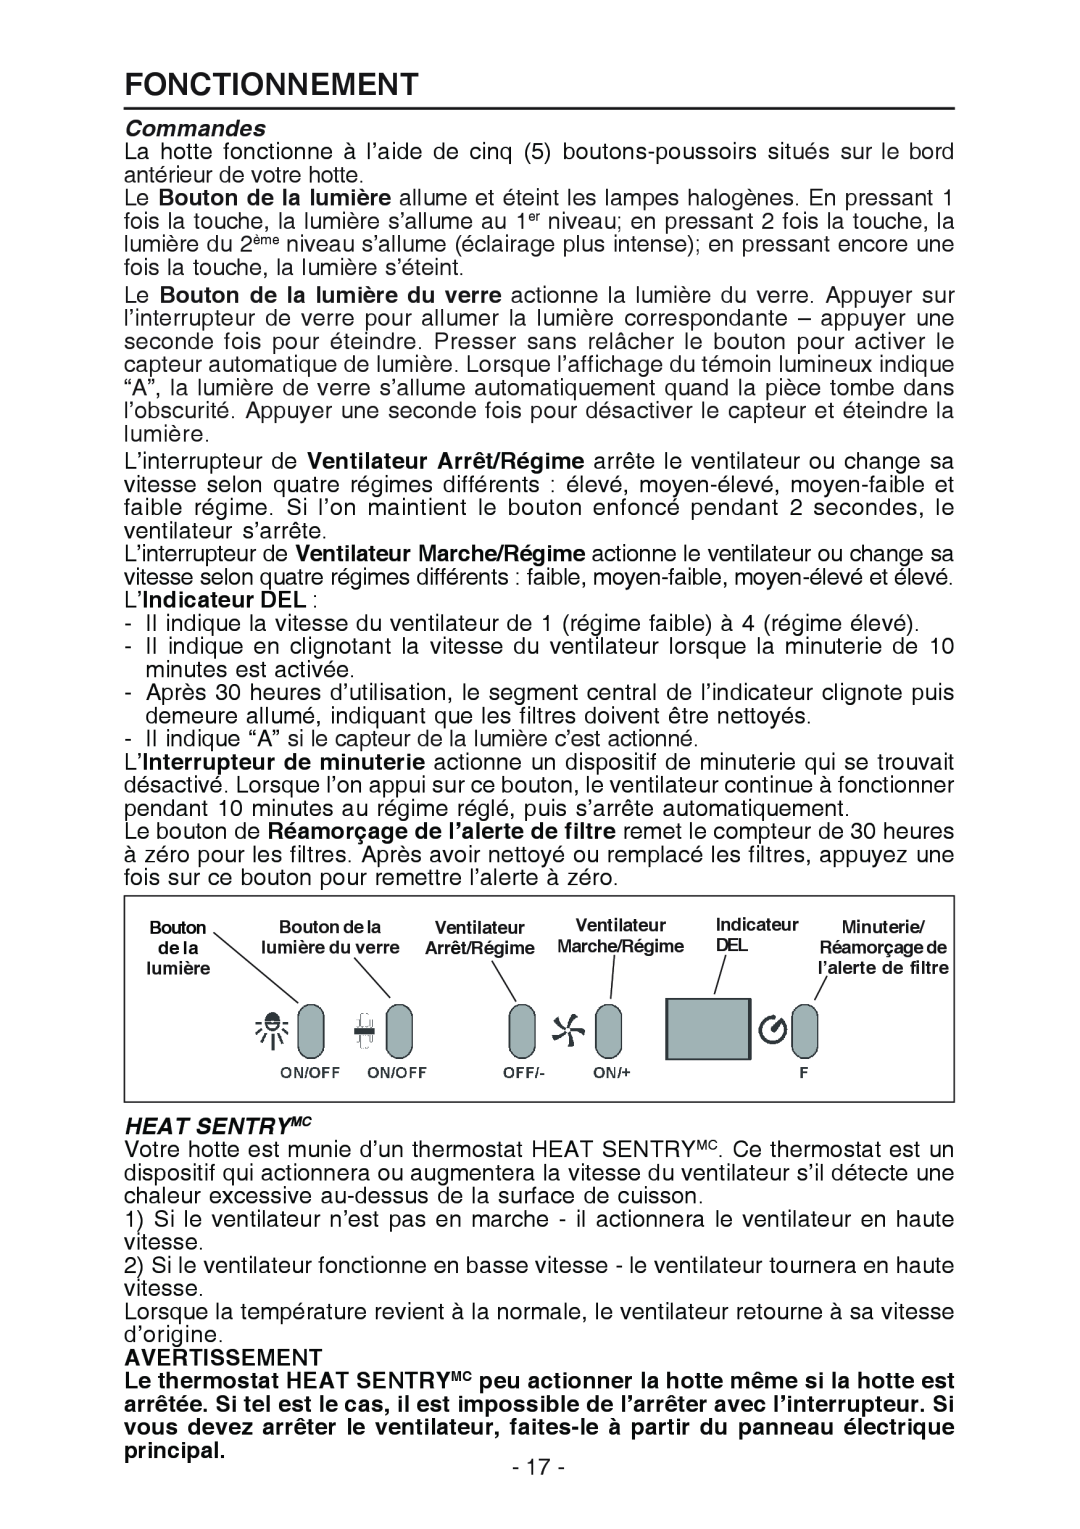 Broan WC26I manual Fonctionnement, Commandes, Heat Sentrymc, Avertissement 